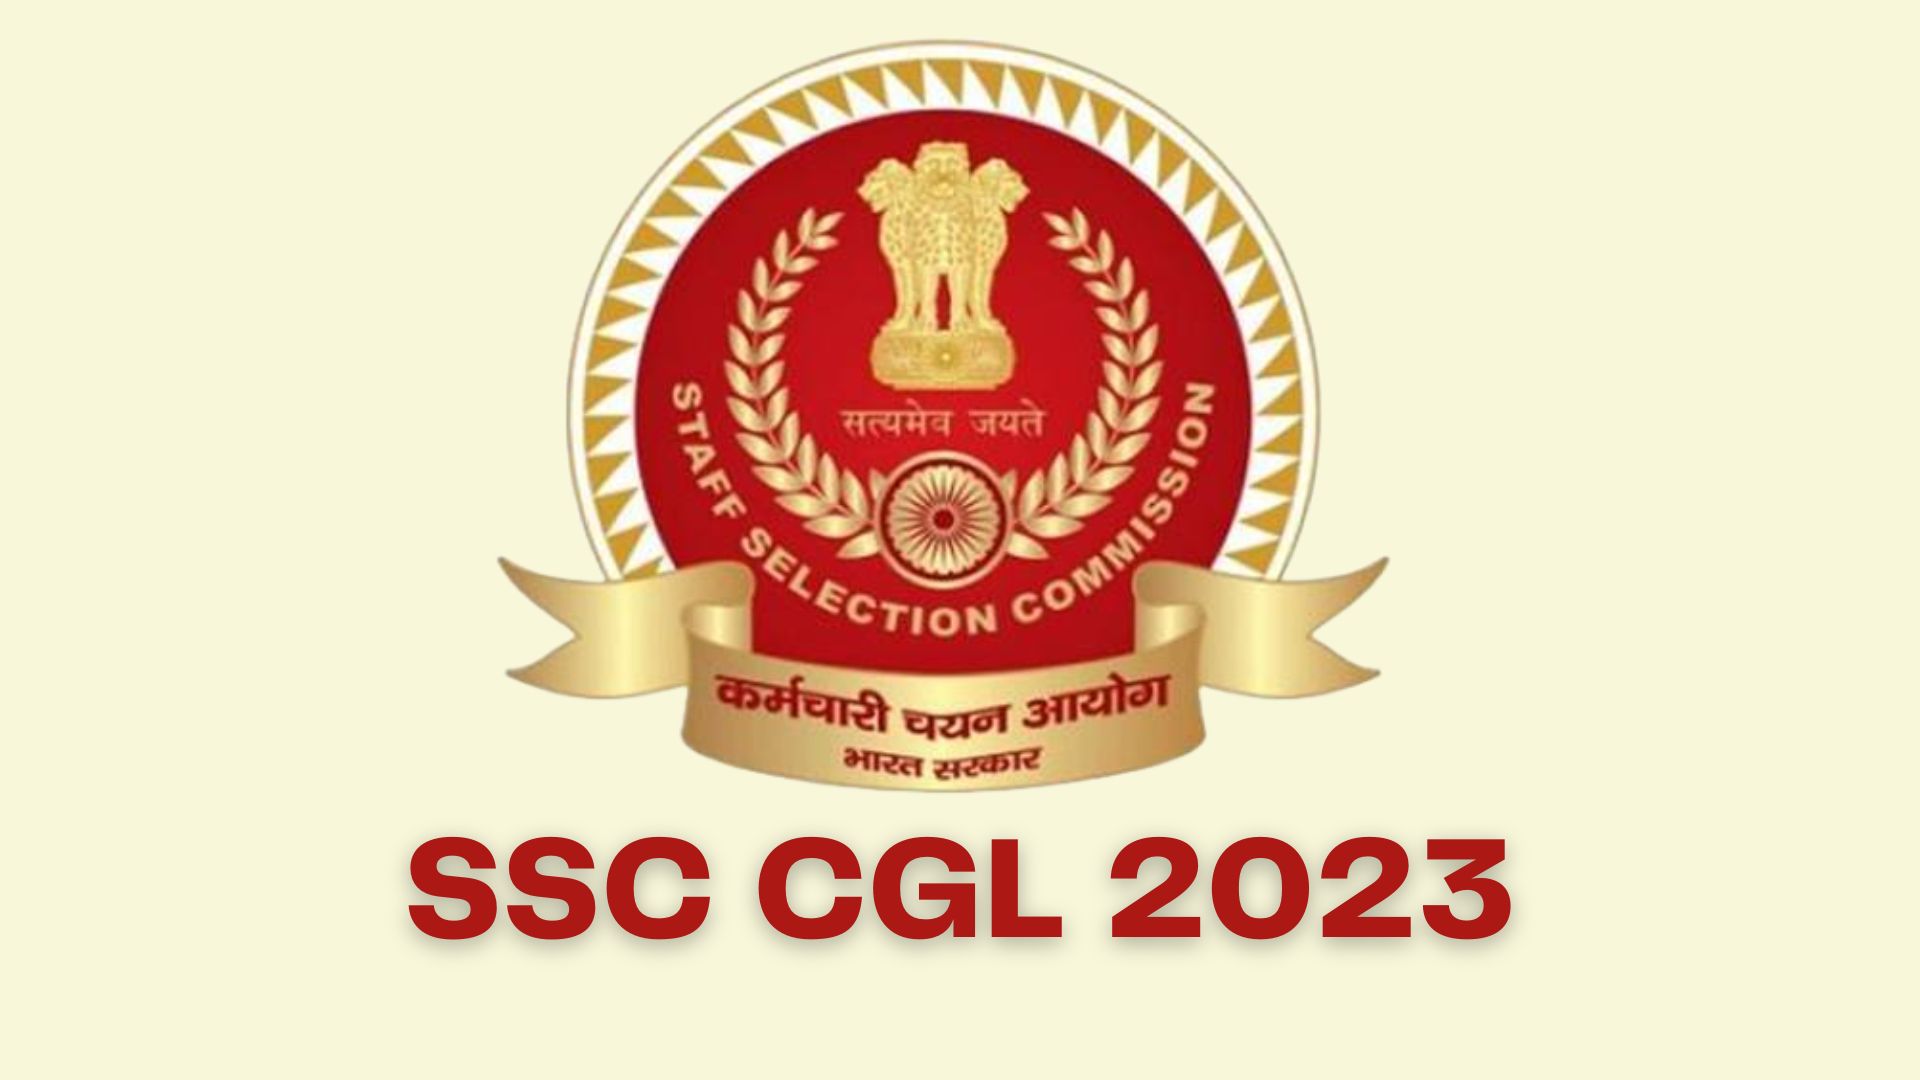 SSC CGL Group C and B Recruitment 2022  Govt Job Hiring